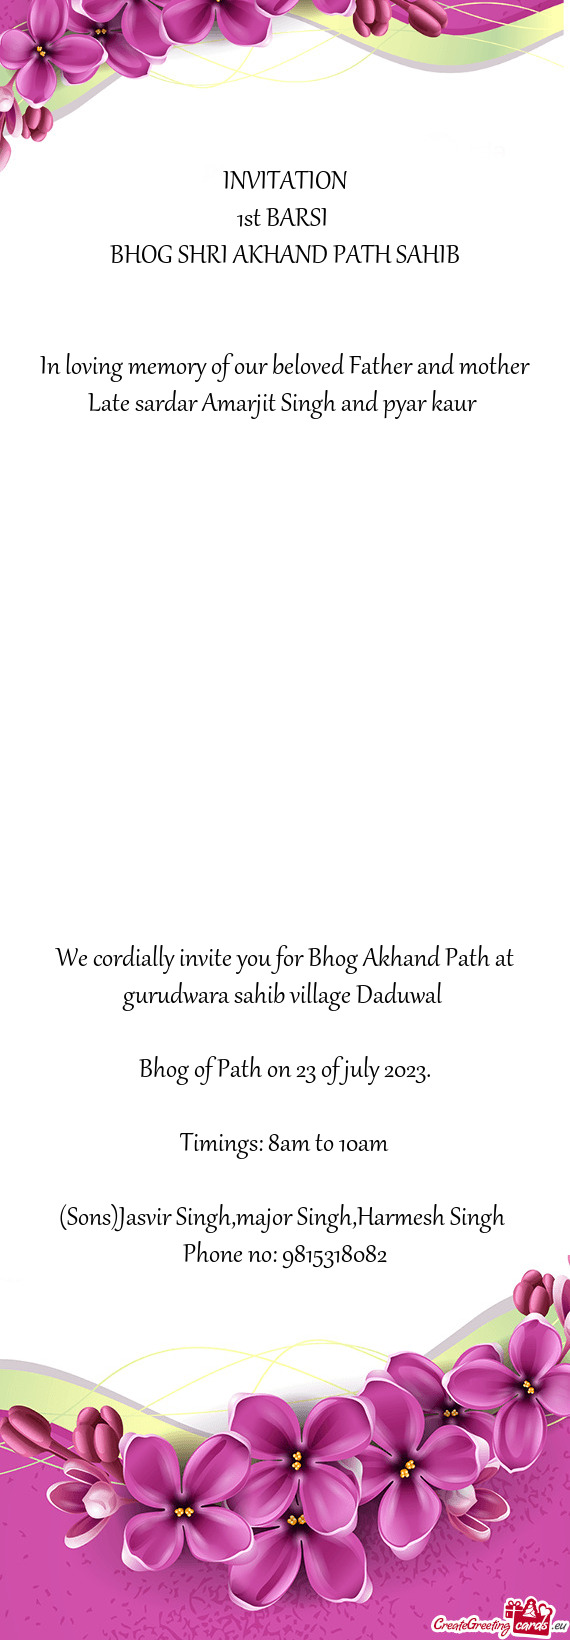 We cordially invite you for Bhog Akhand Path at gurudwara sahib village Daduwal